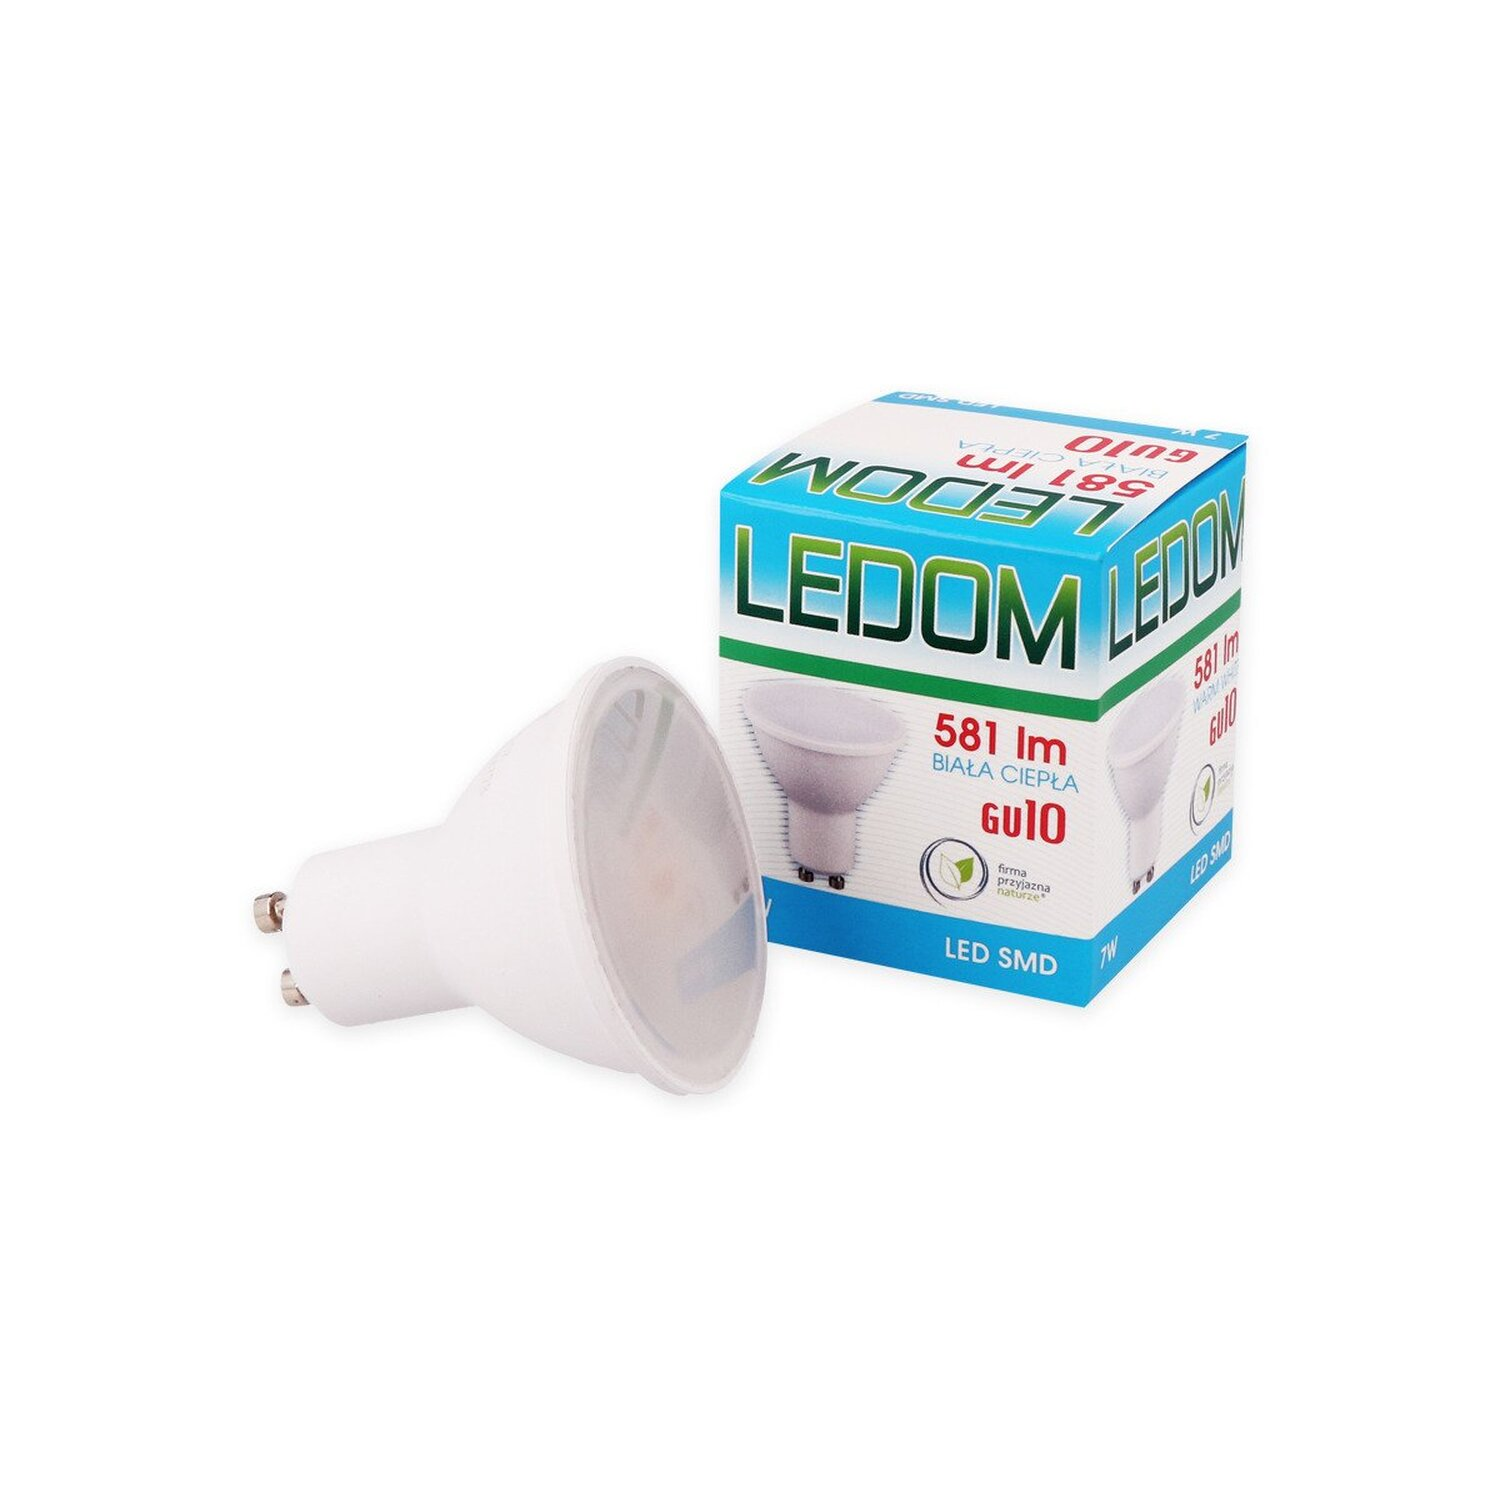 Warmweiß LED 1x Spot 581 7W LINE Strahler Lumen LED Leuchtmittel GU10